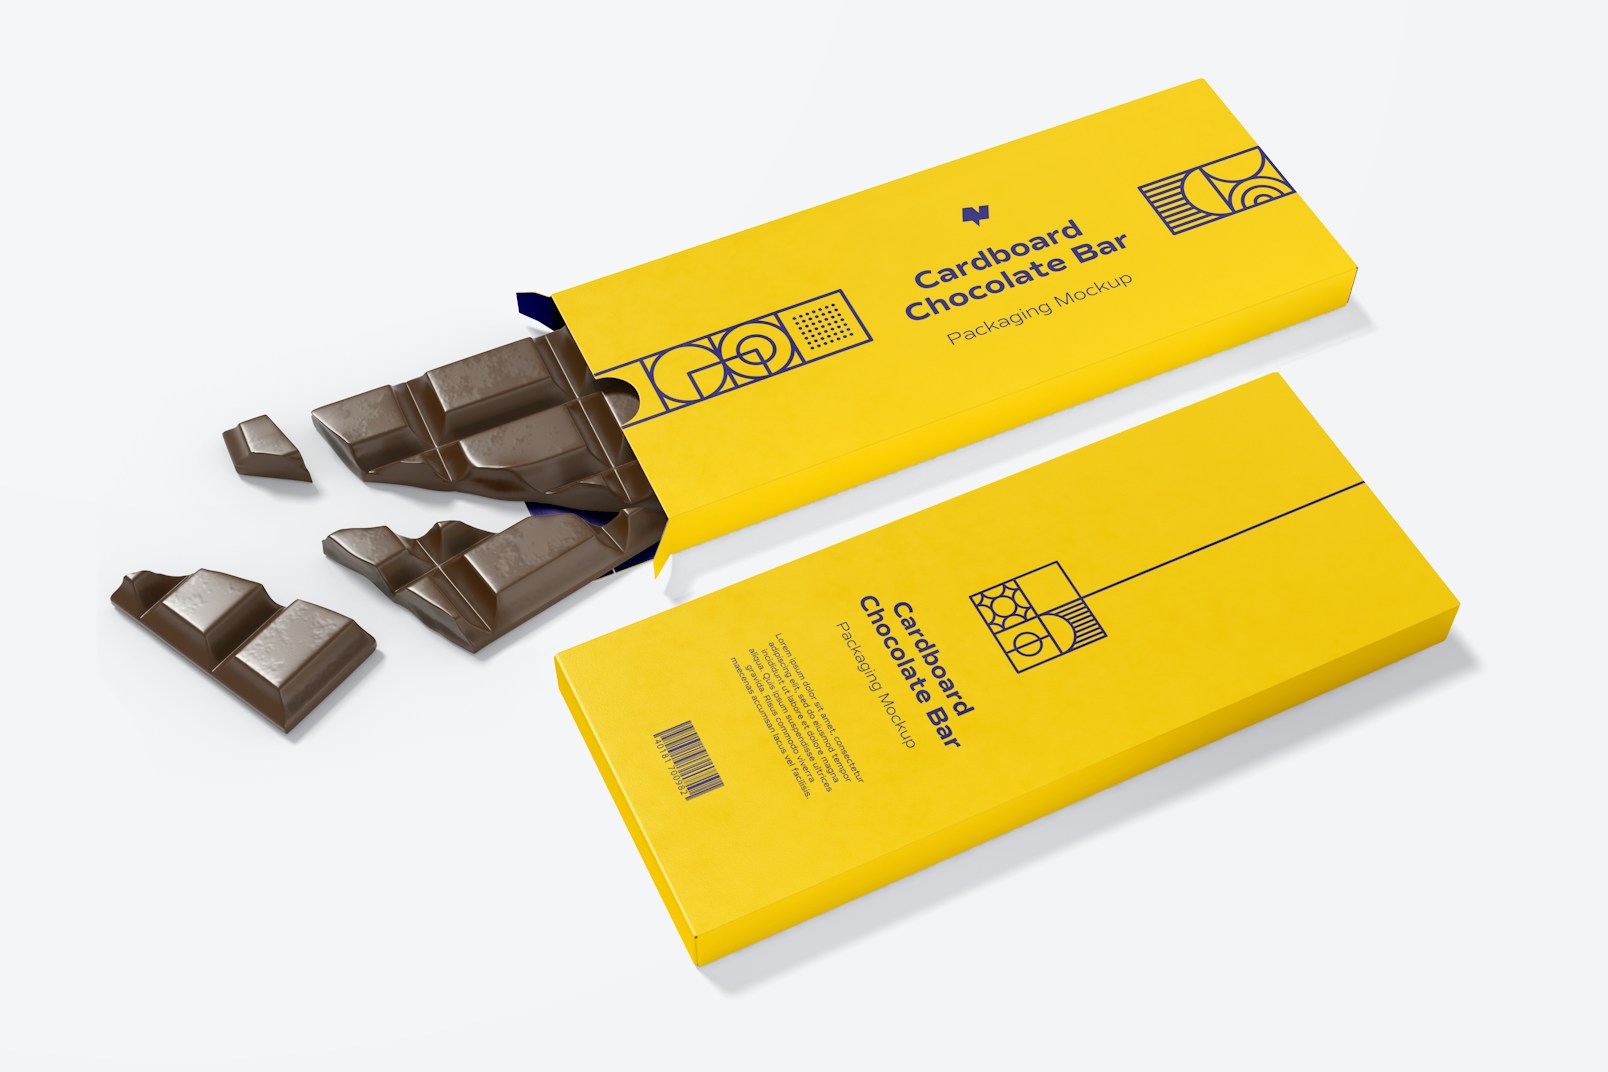 Cardboard Chocolate Bar Packaging Mockup, Perspective